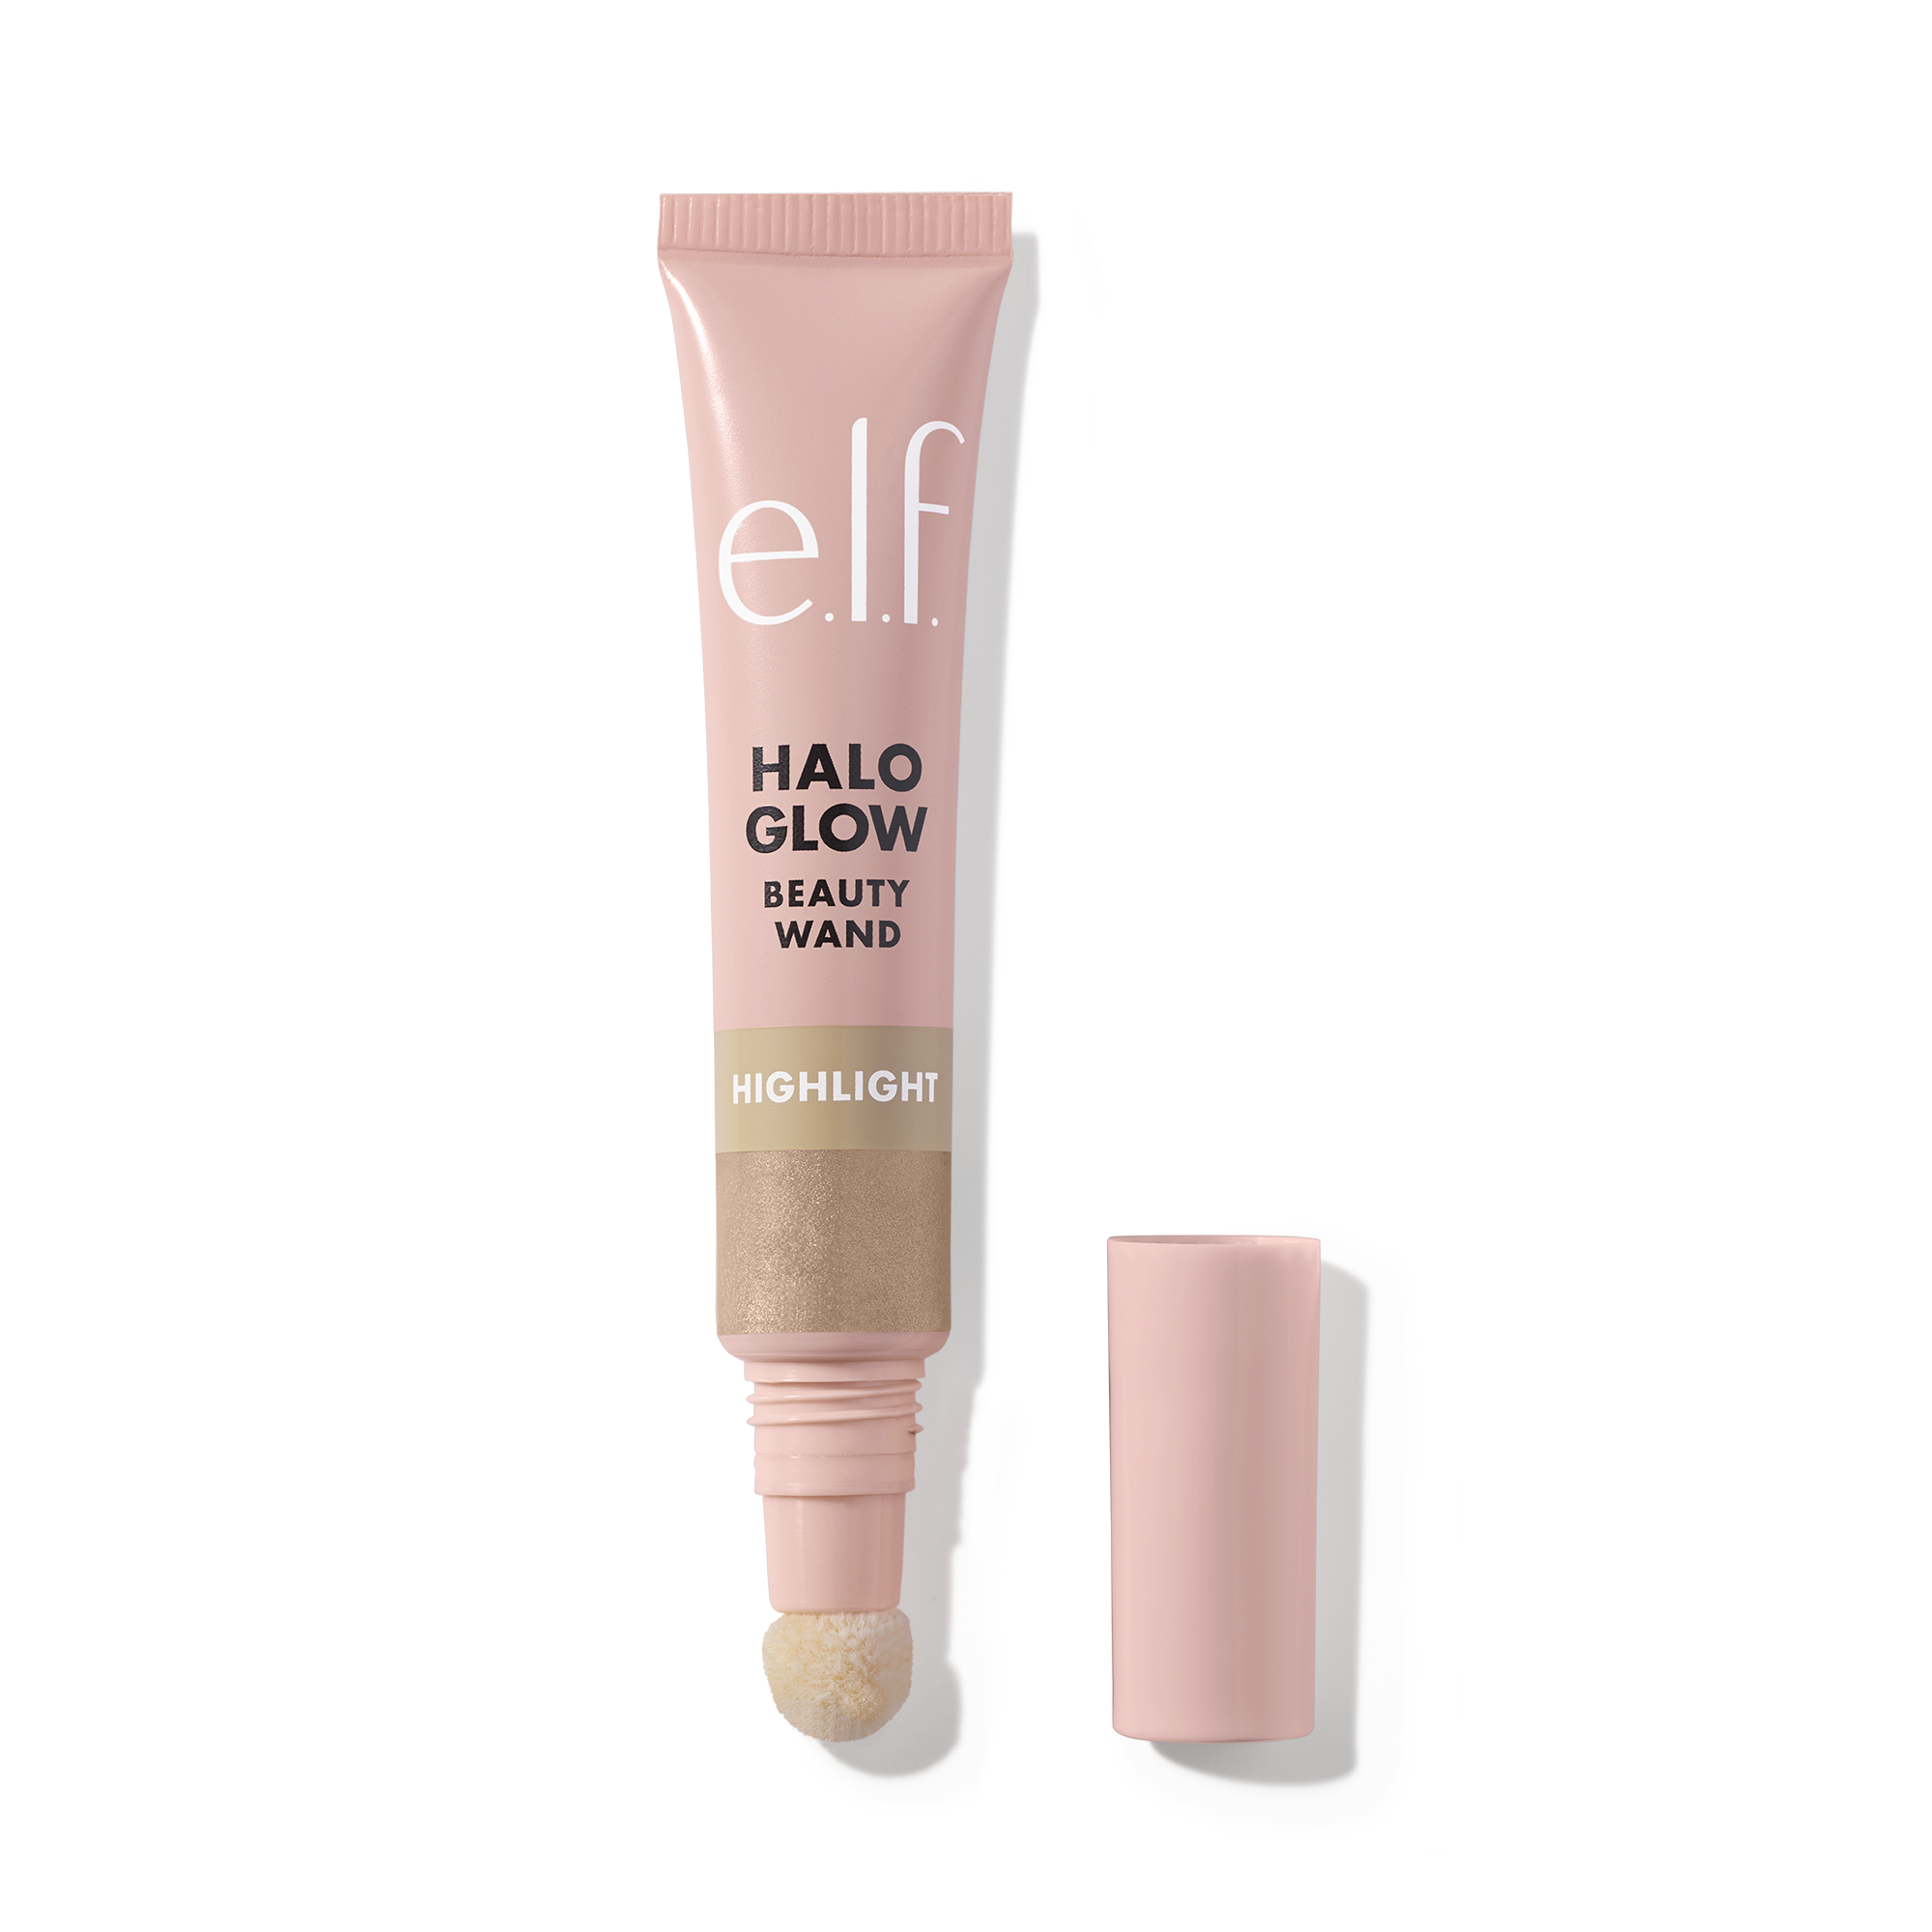 Halo Glow Liquid Filter - e.l.f. Cosmetics